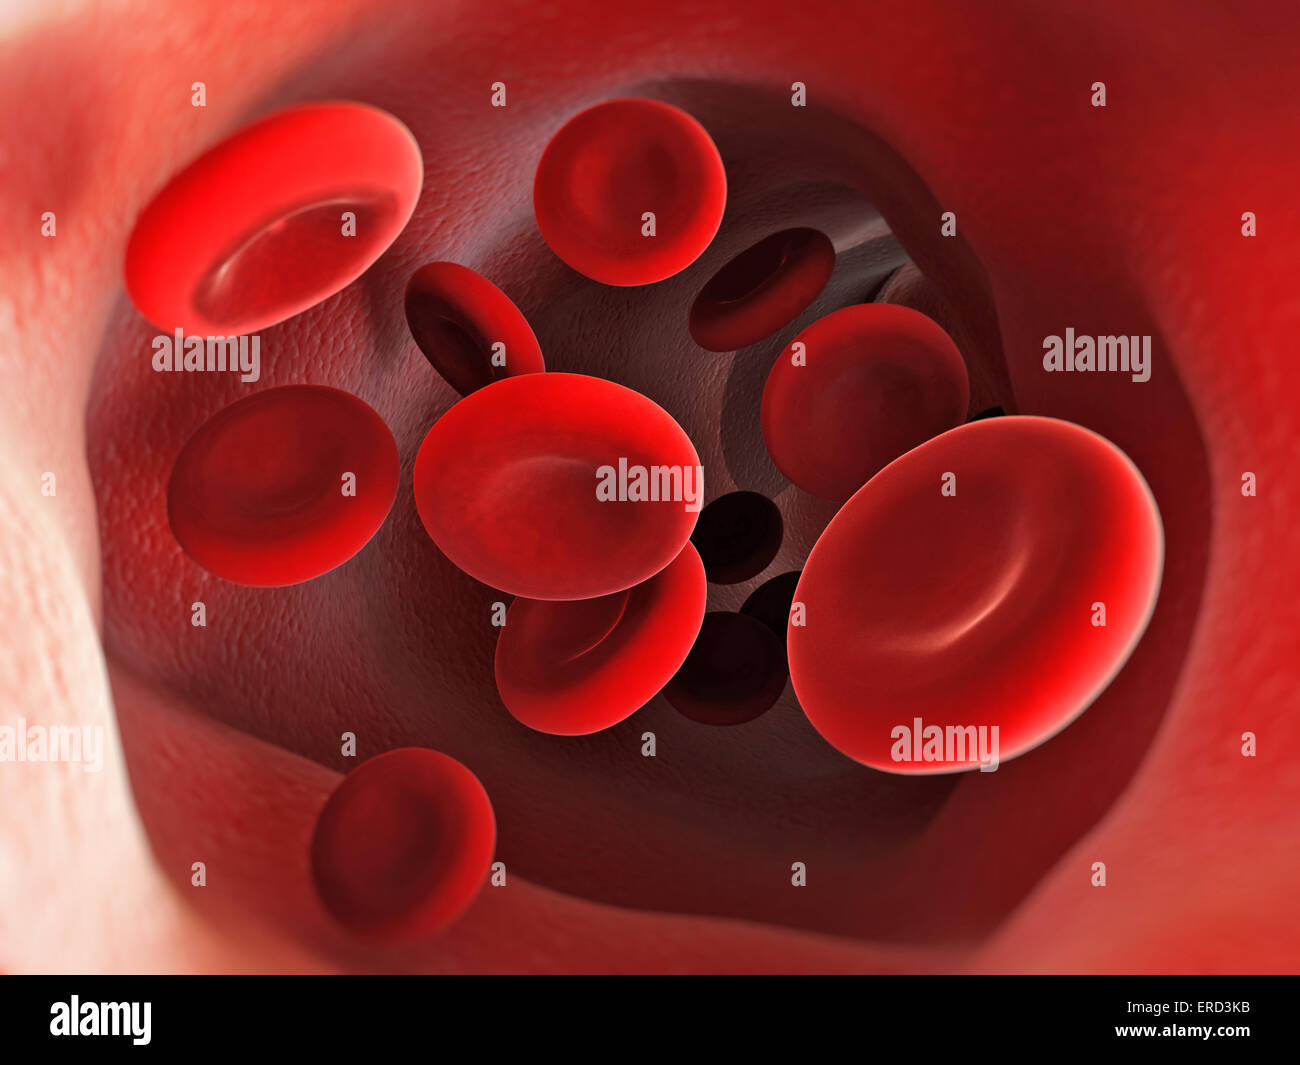 Blood cells inside human vein. Stock Photo